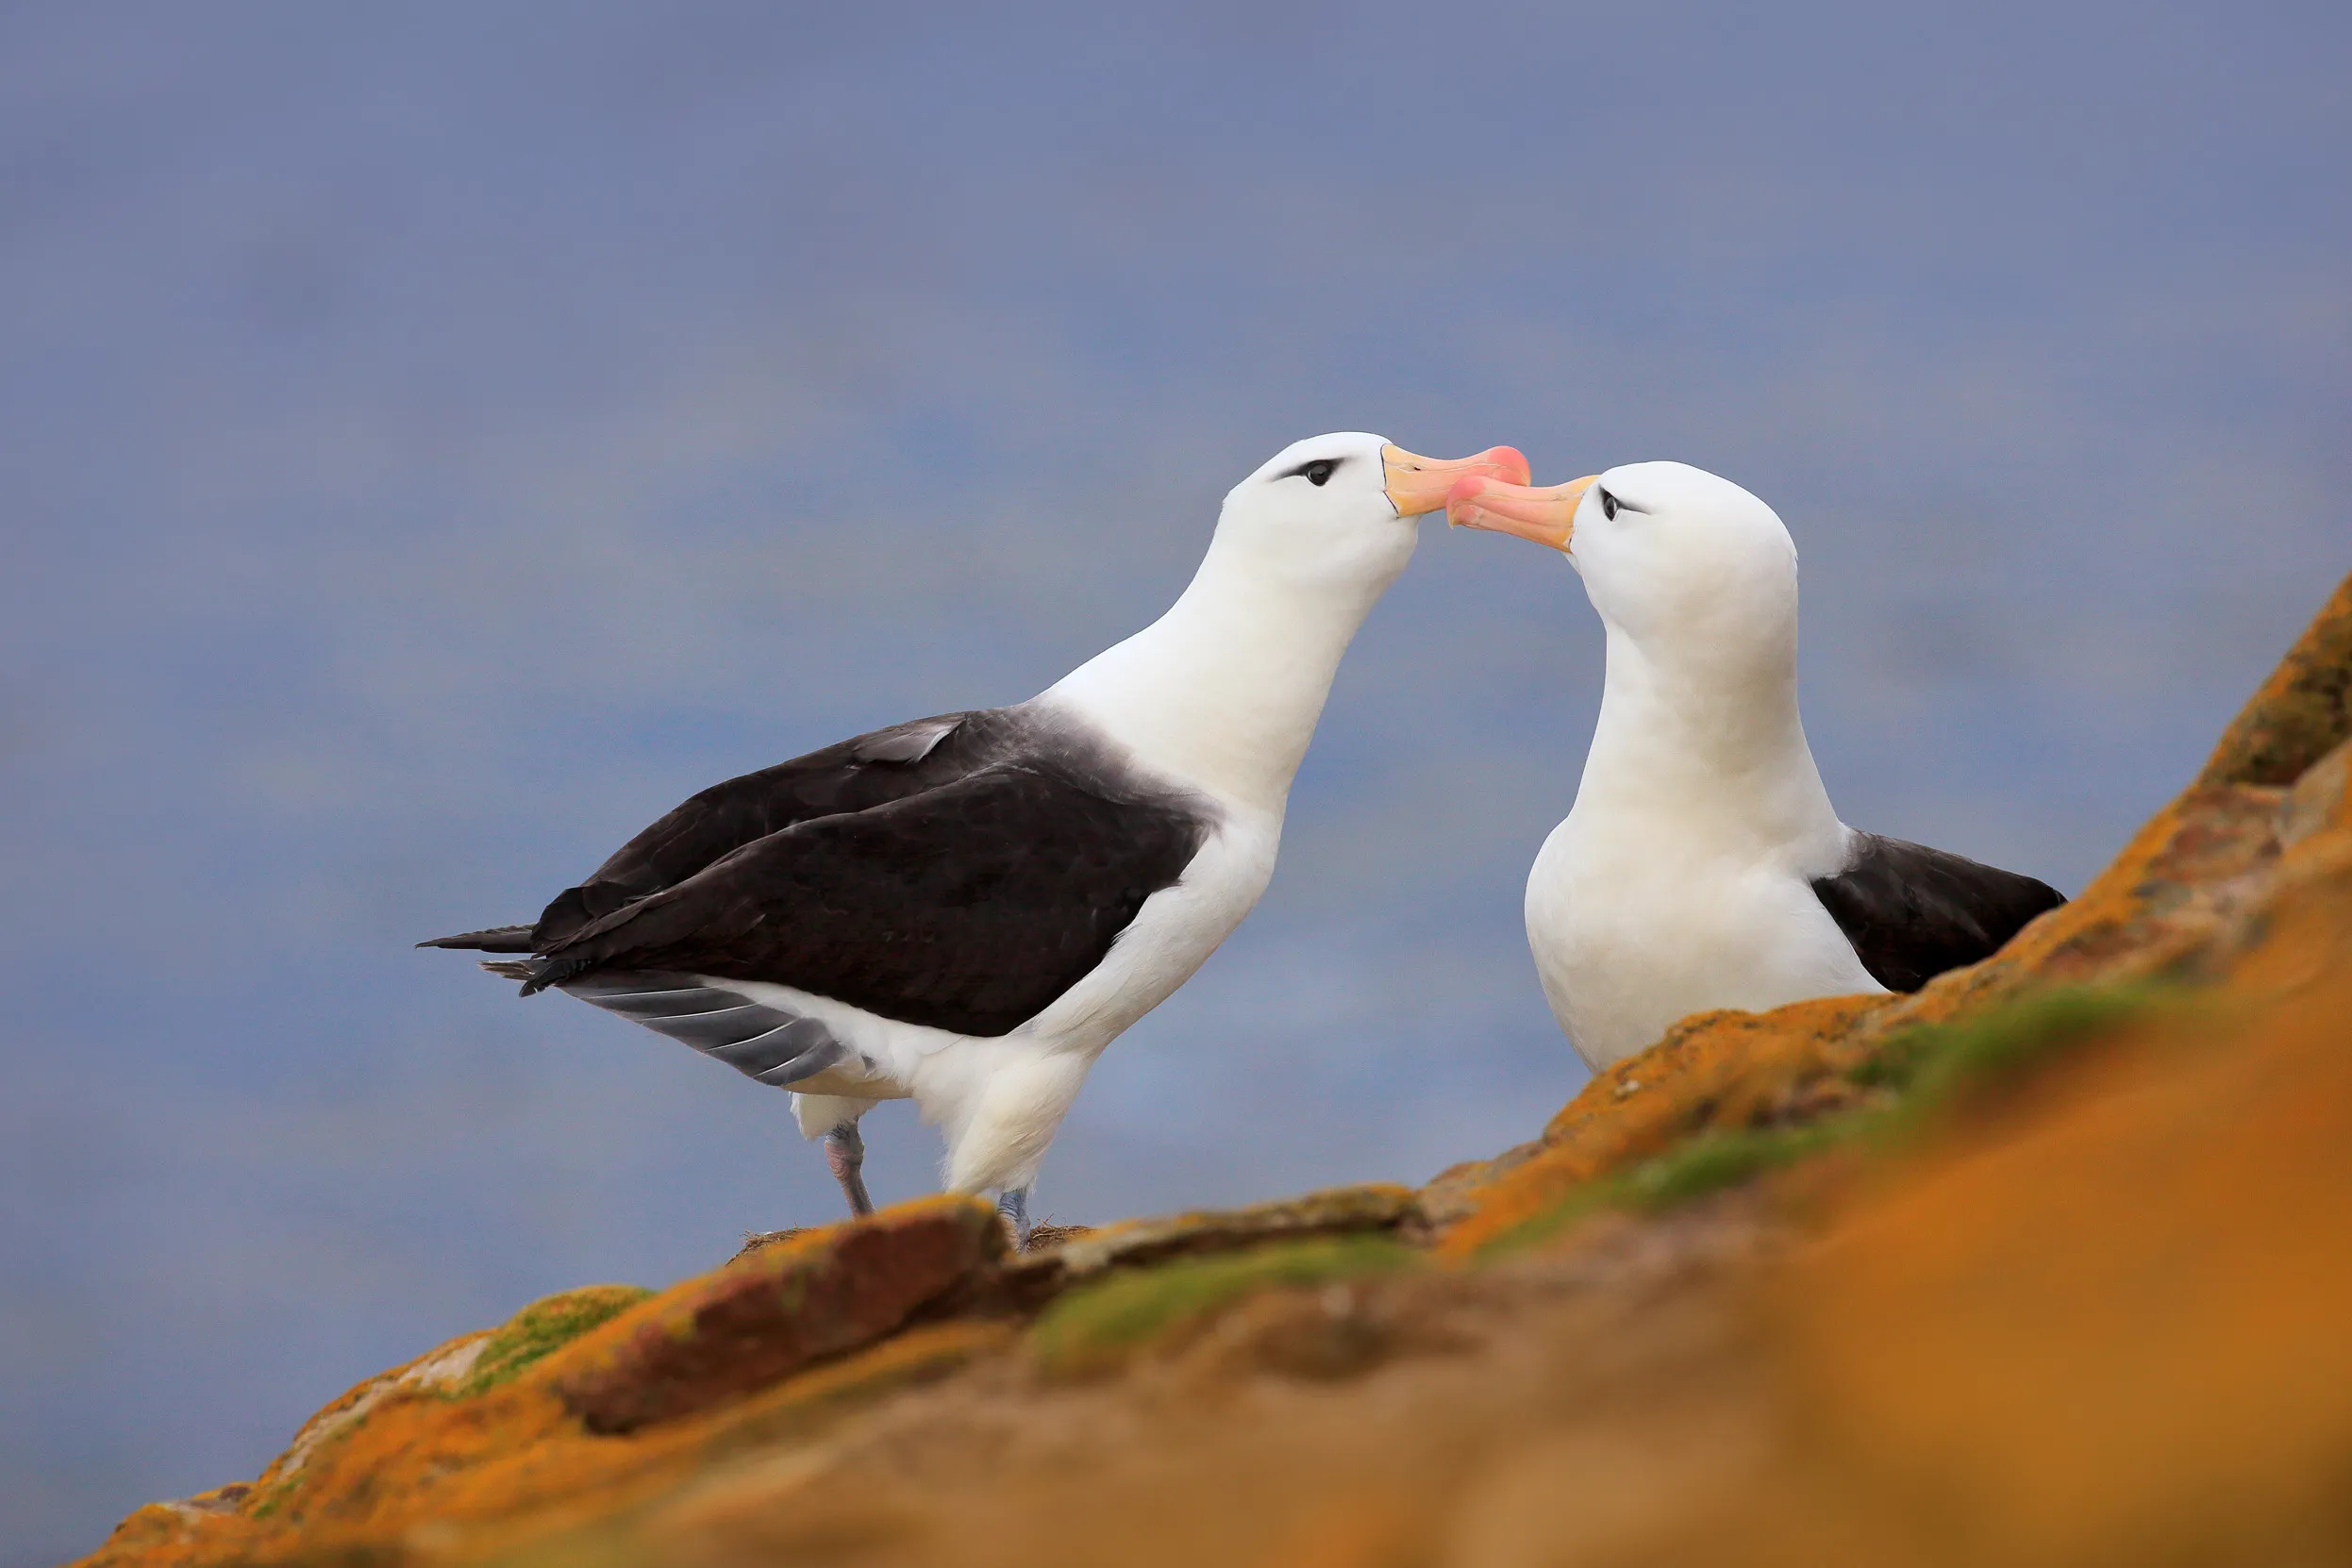 A pair of Black-browed albatross touching beaks on a cliffs edge.